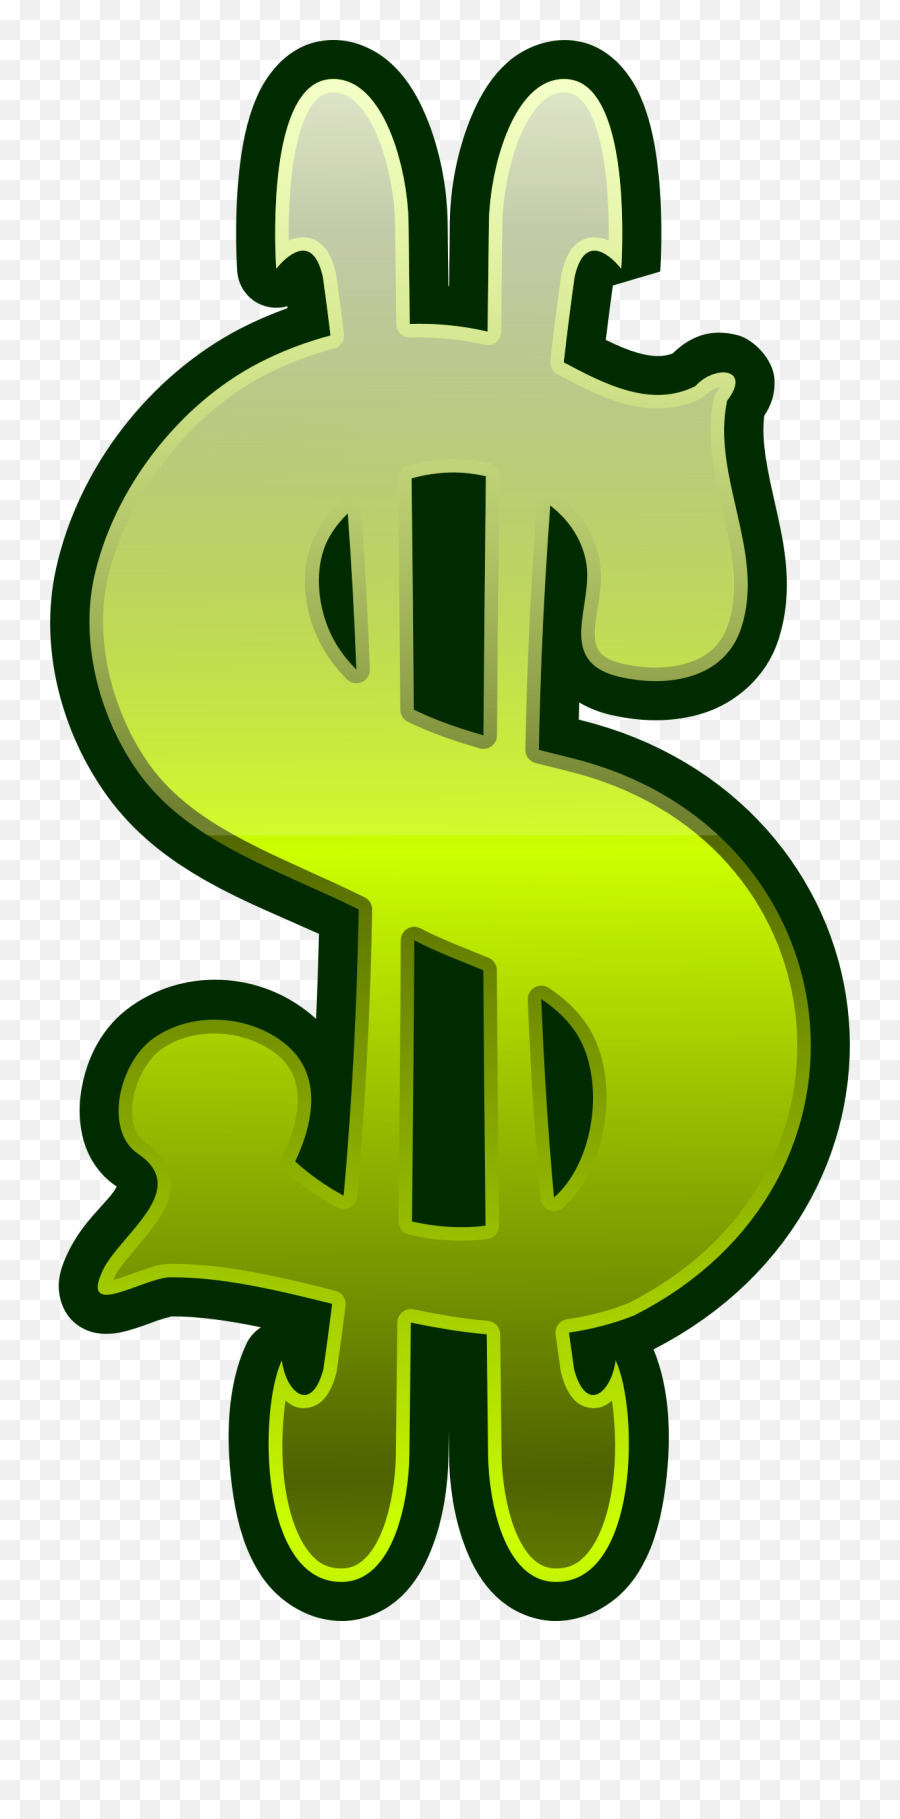 Dollar Sign Gambling Gradient - Free Vector Graphic On Pixabay Dollar Sign Png,Dollar Sign Transparent